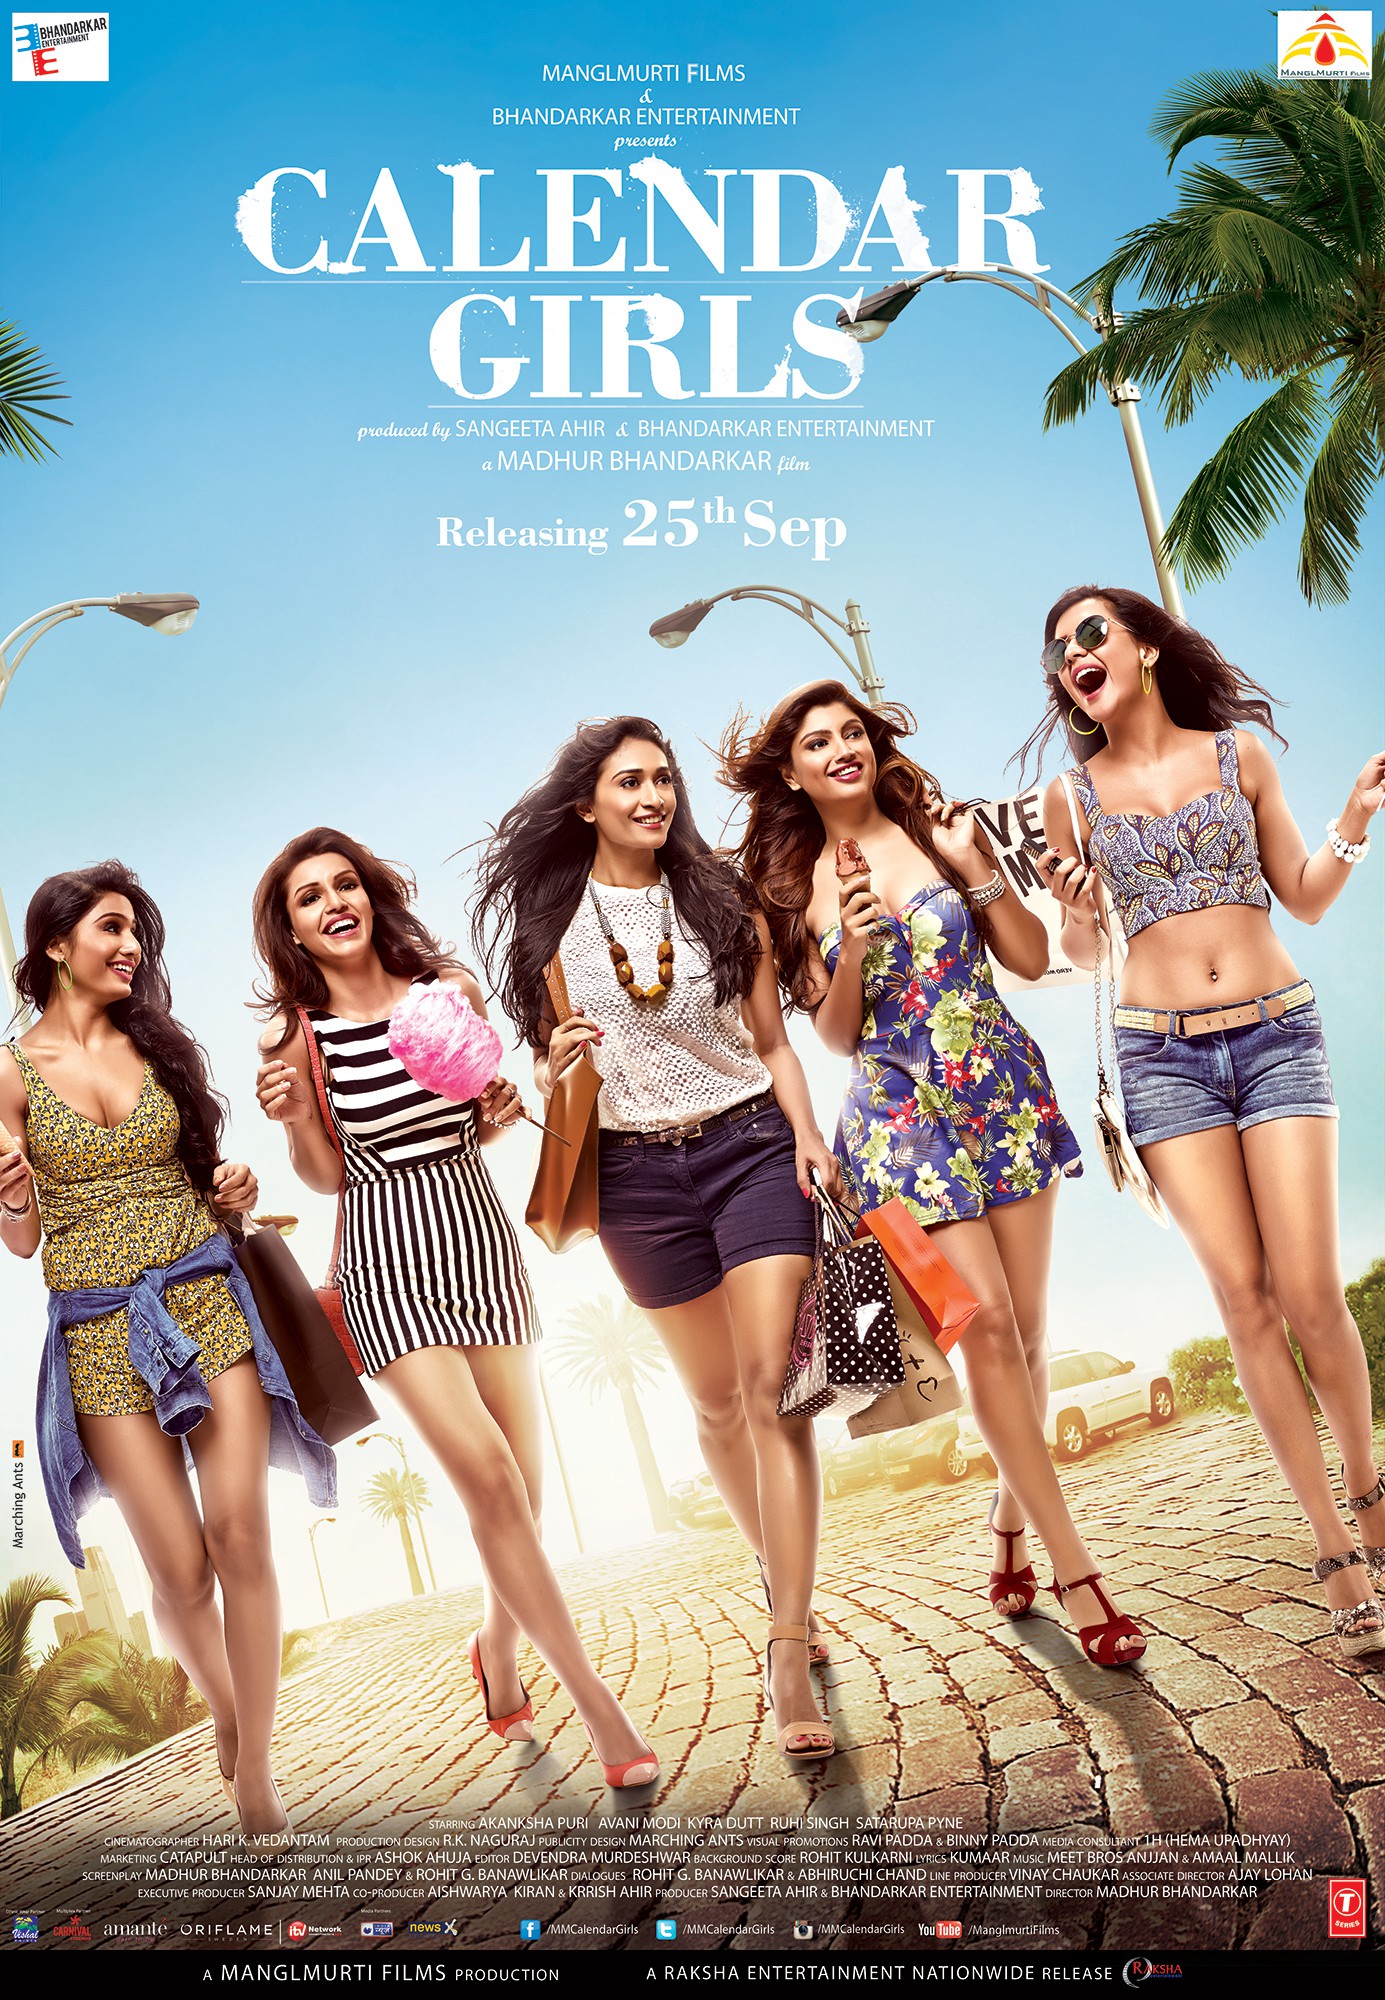 Mega Sized Movie Poster Image for Calendar Girls (#4 of 6)